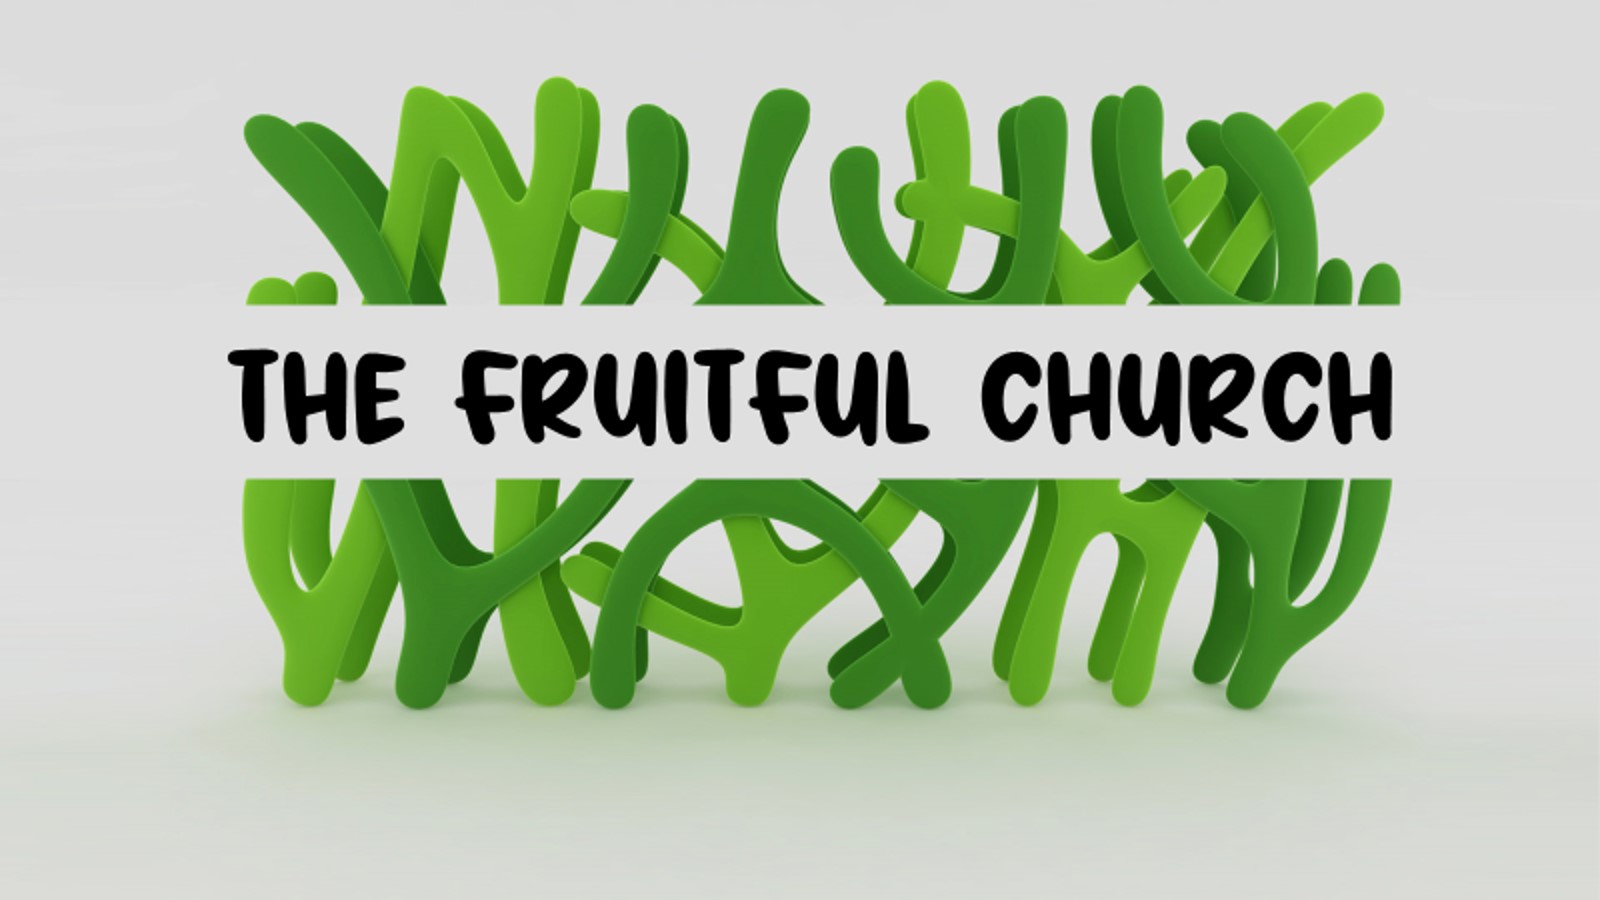 The Sending Church is Fruitful